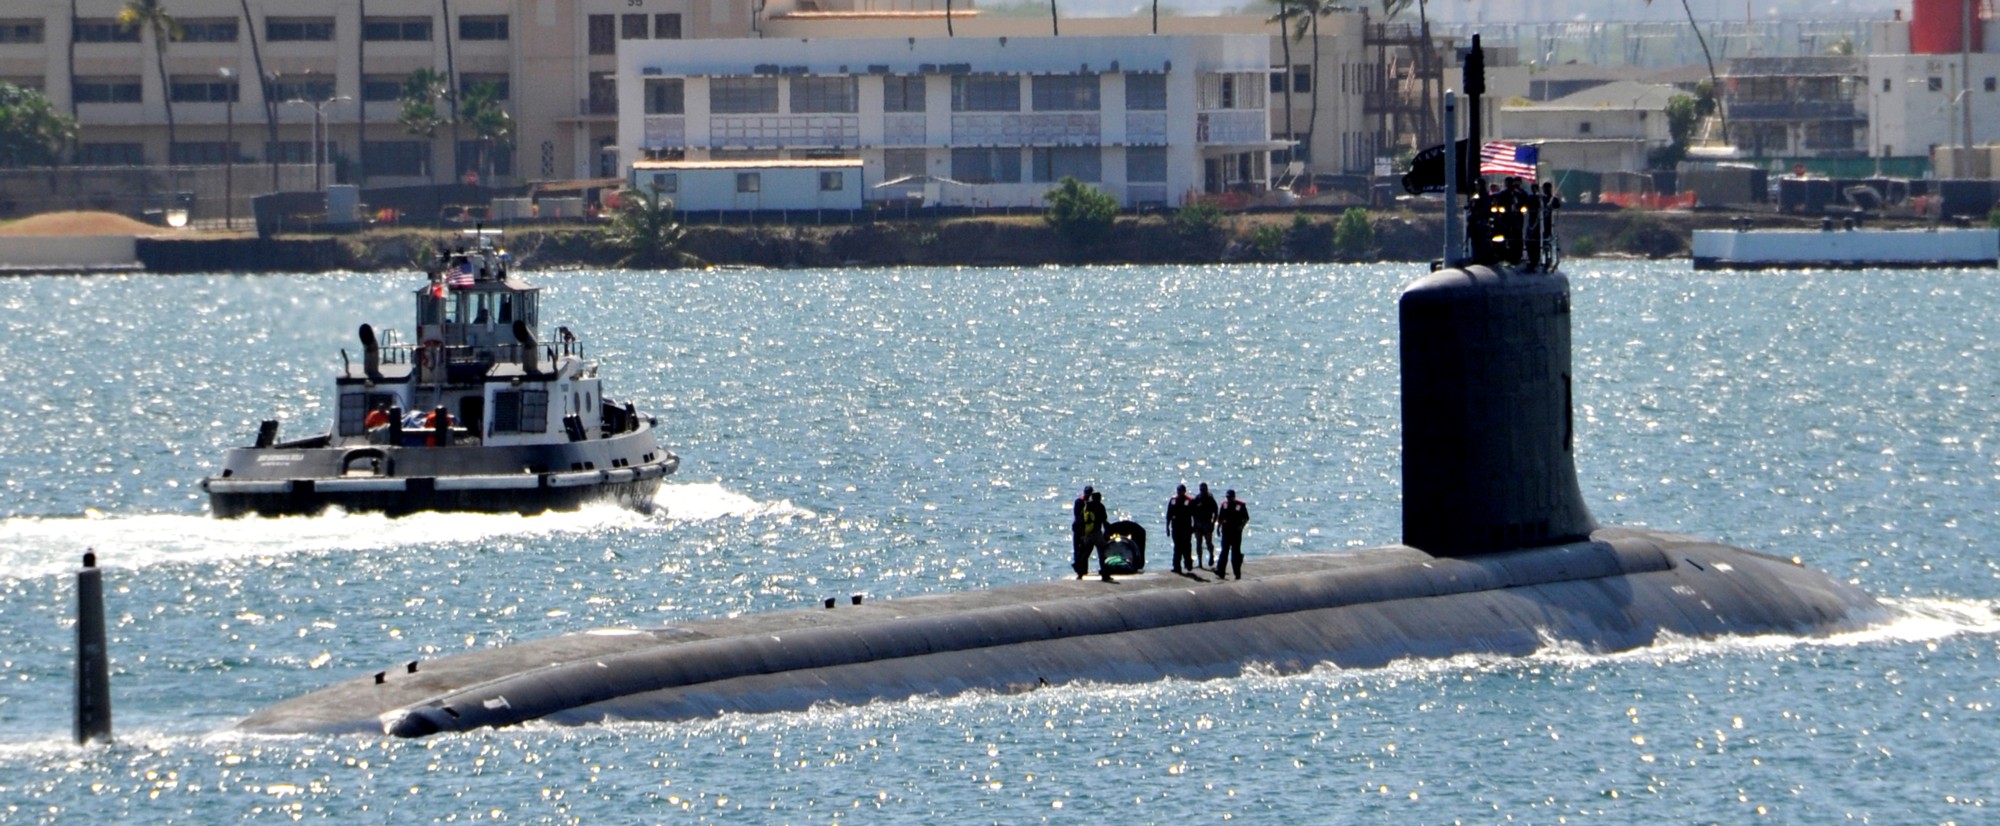 ssn-776 uss hawaii virginia class attack submarine us navy 2012 17